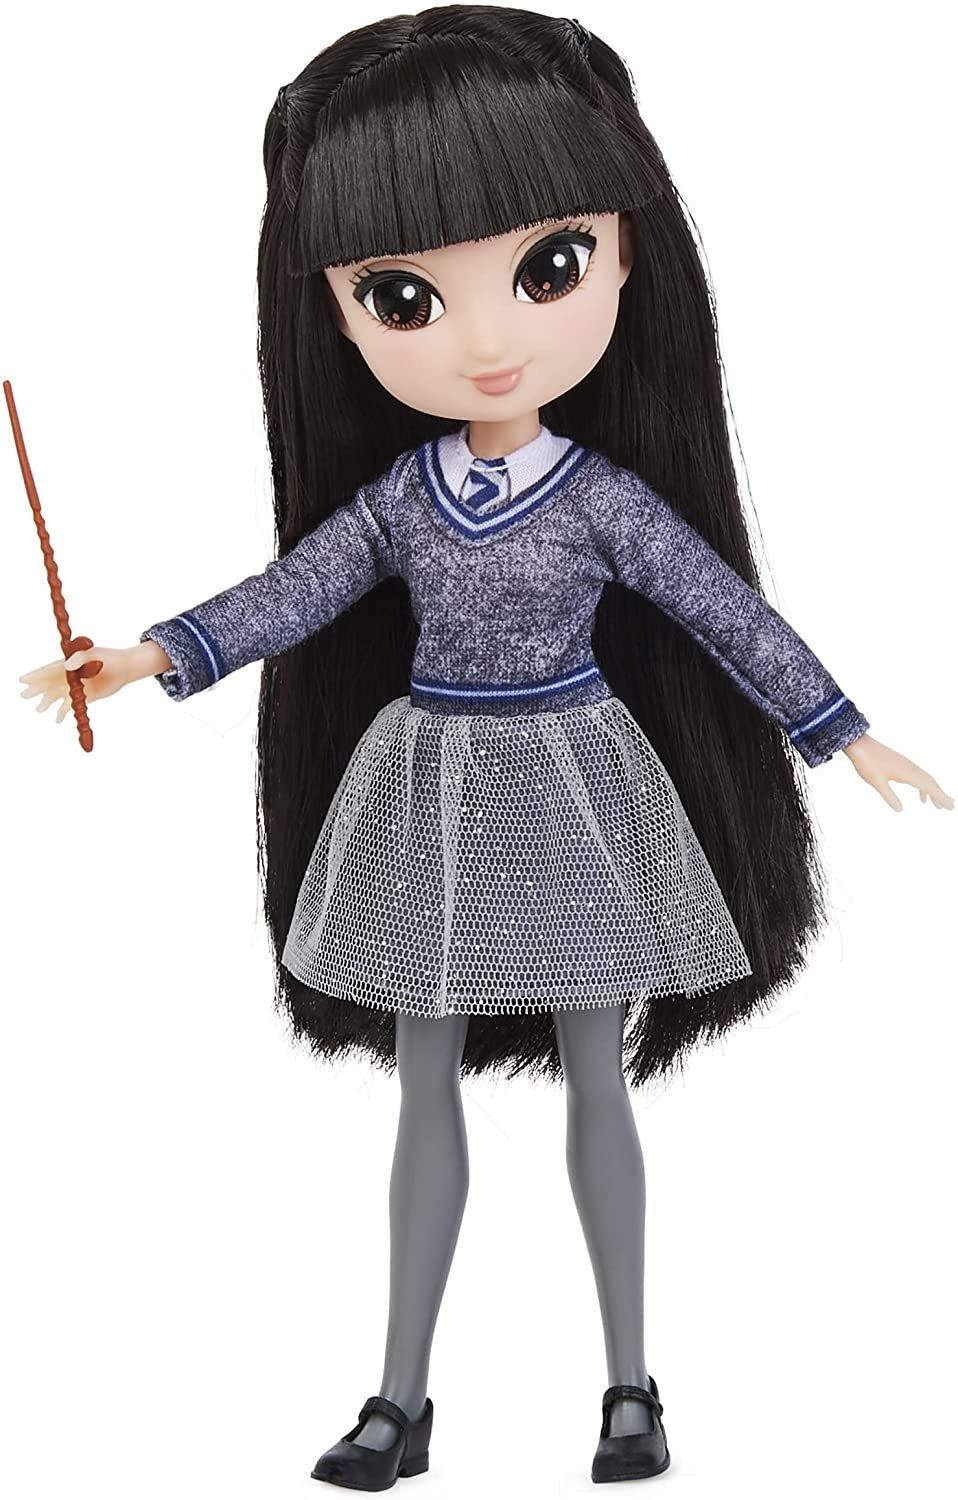 Wizarding World 8 inch Tall Cho Chang Doll